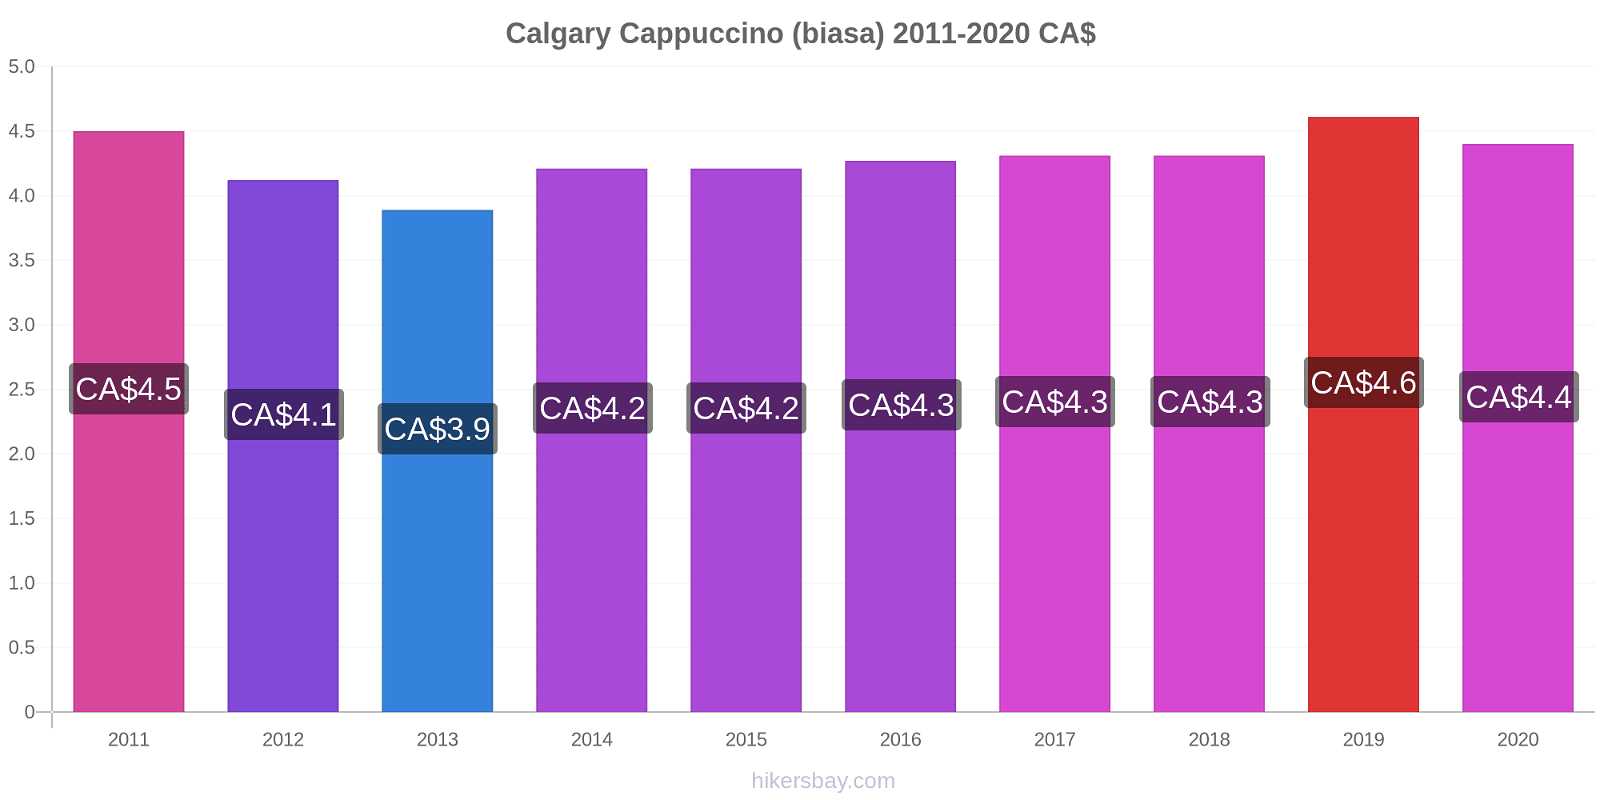 Calgary perubahan harga Cappuccino (biasa) hikersbay.com